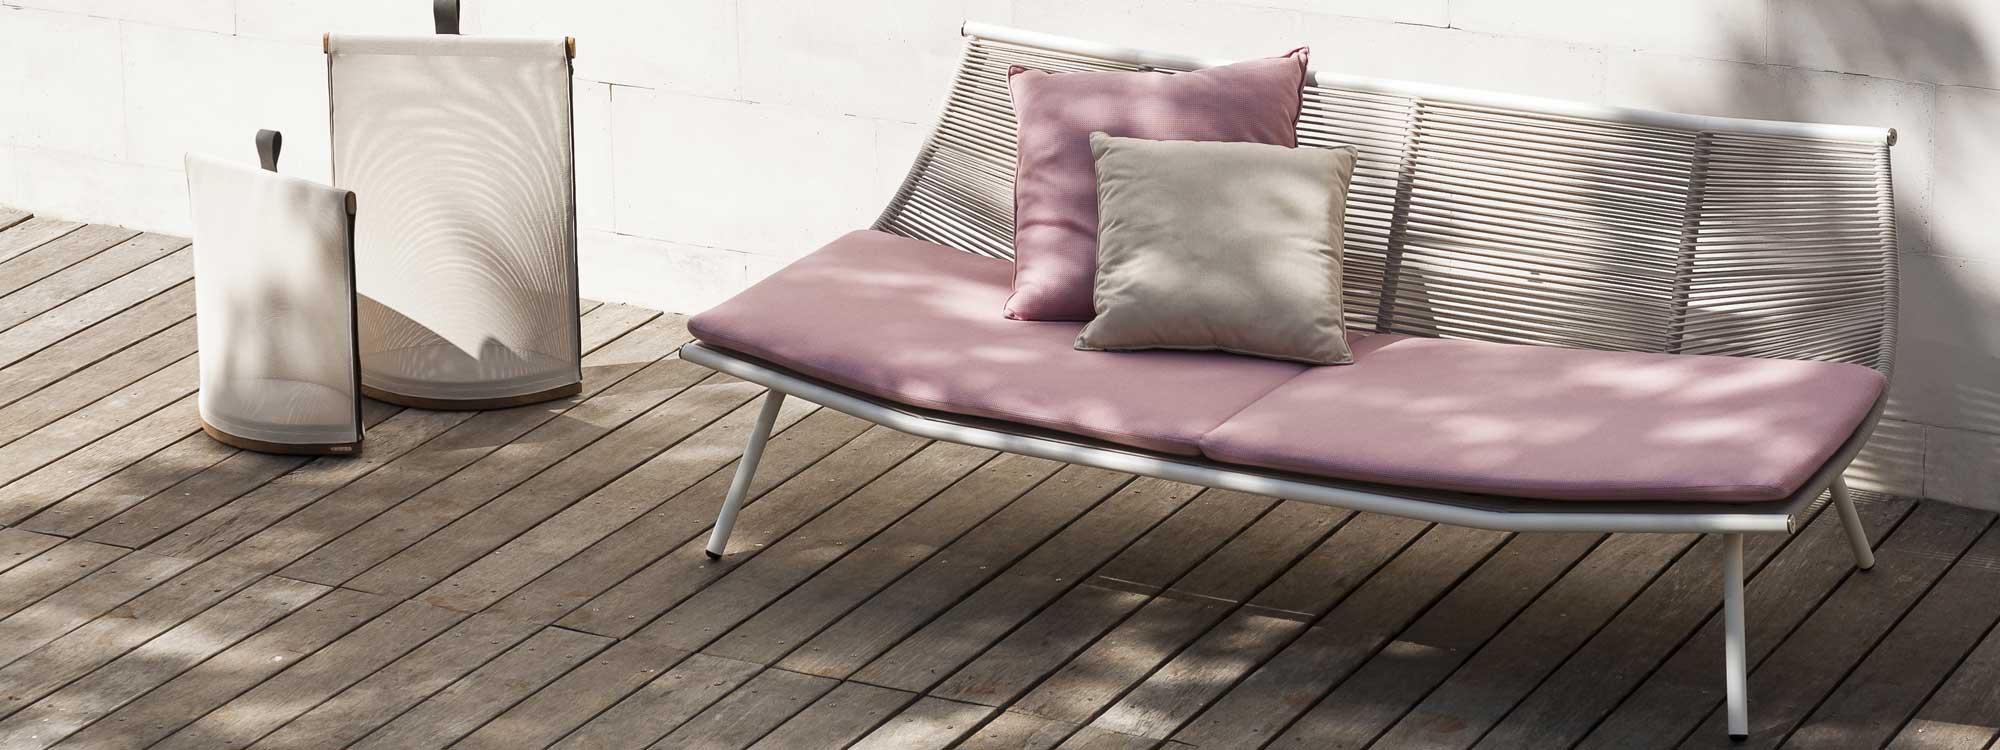 Laze designer outdoor sofa is a compact modern garden sofa in high quality garden furniture materials by Roda luxury Italian exterior furniture